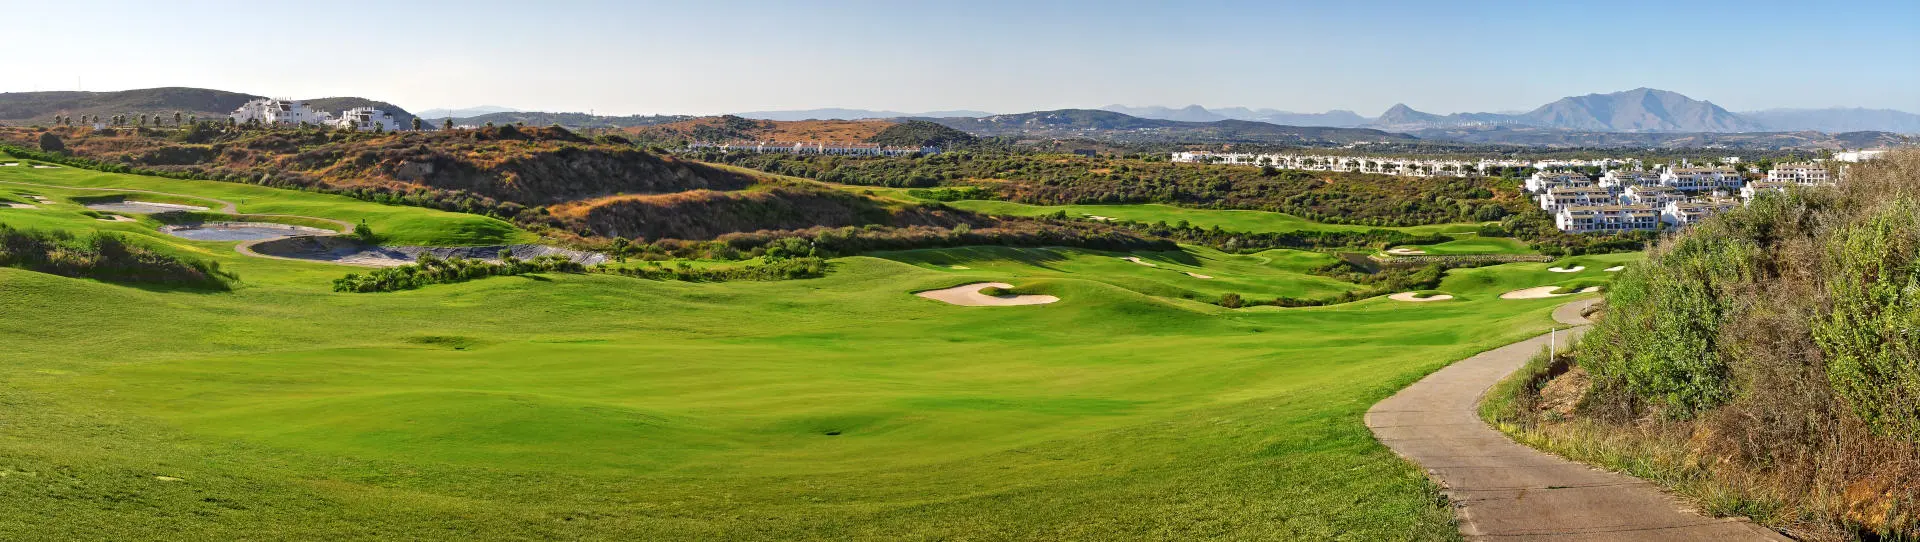 Spain Golf Driving Range - La Hacienda Alcaidesa Links Golf Resort Academy - Photo 2